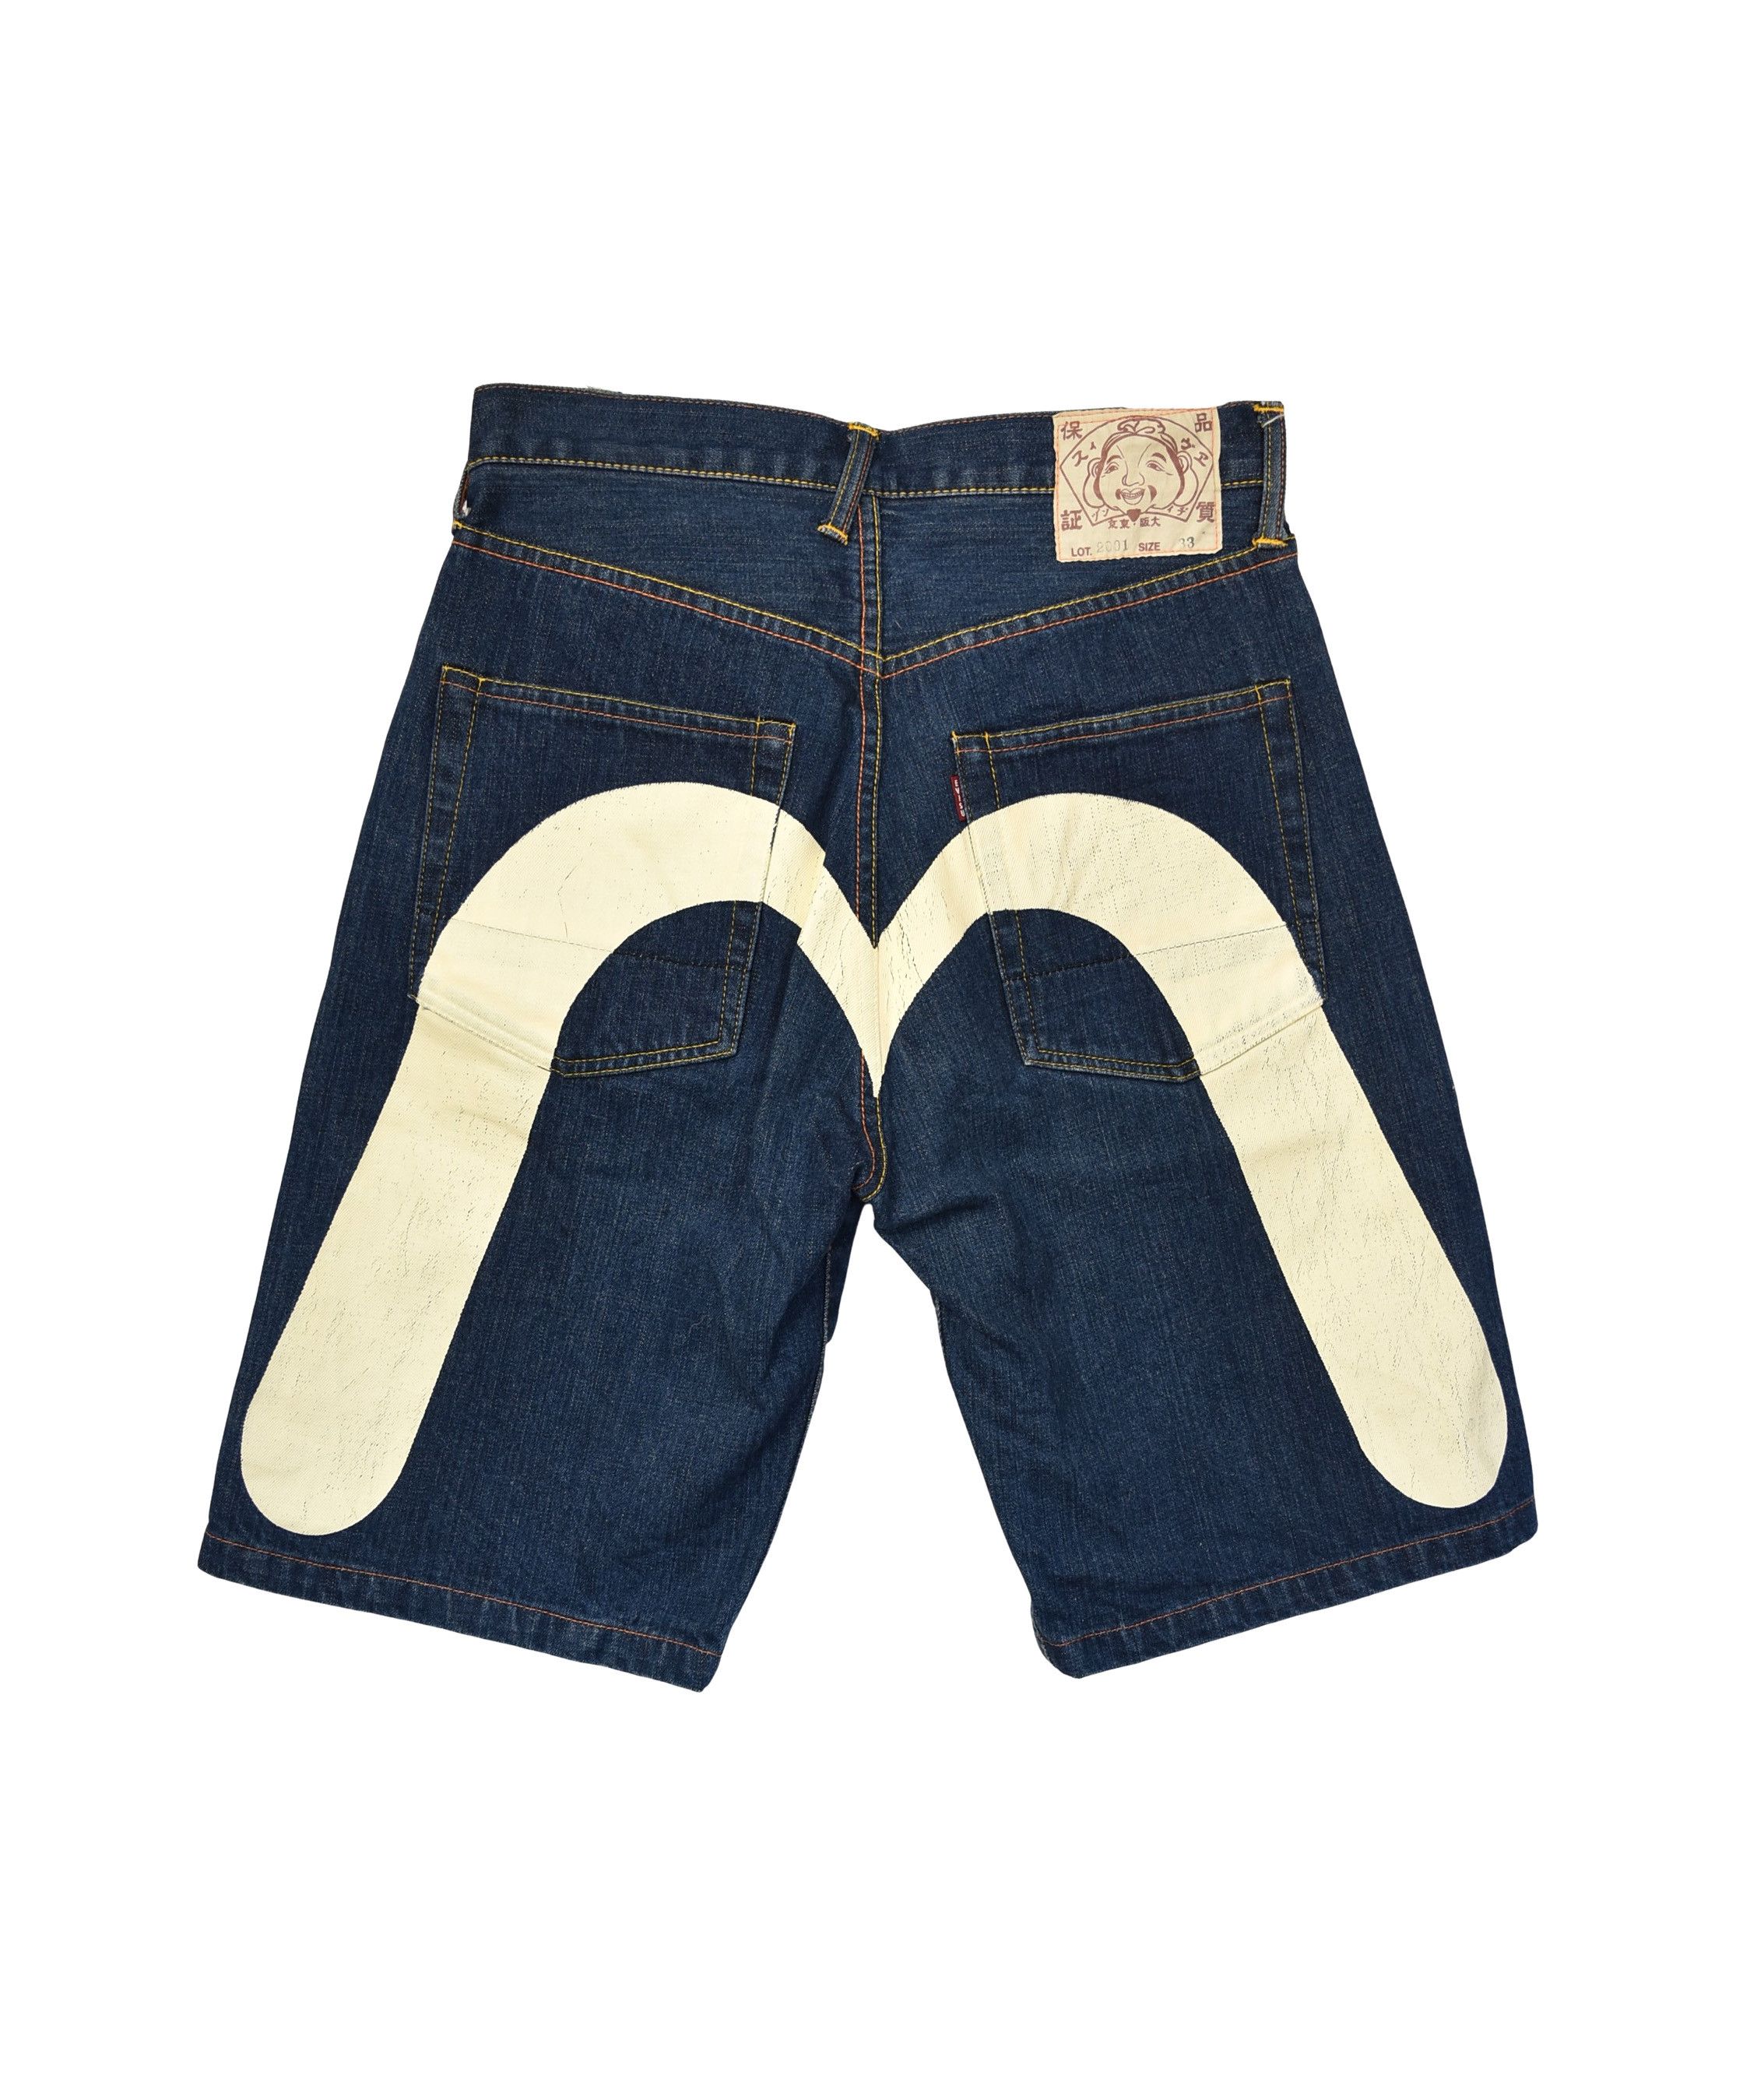 Evisu EVISU/painted denim shorts/22391 - 0429 75 Size US 33 - 1 Preview